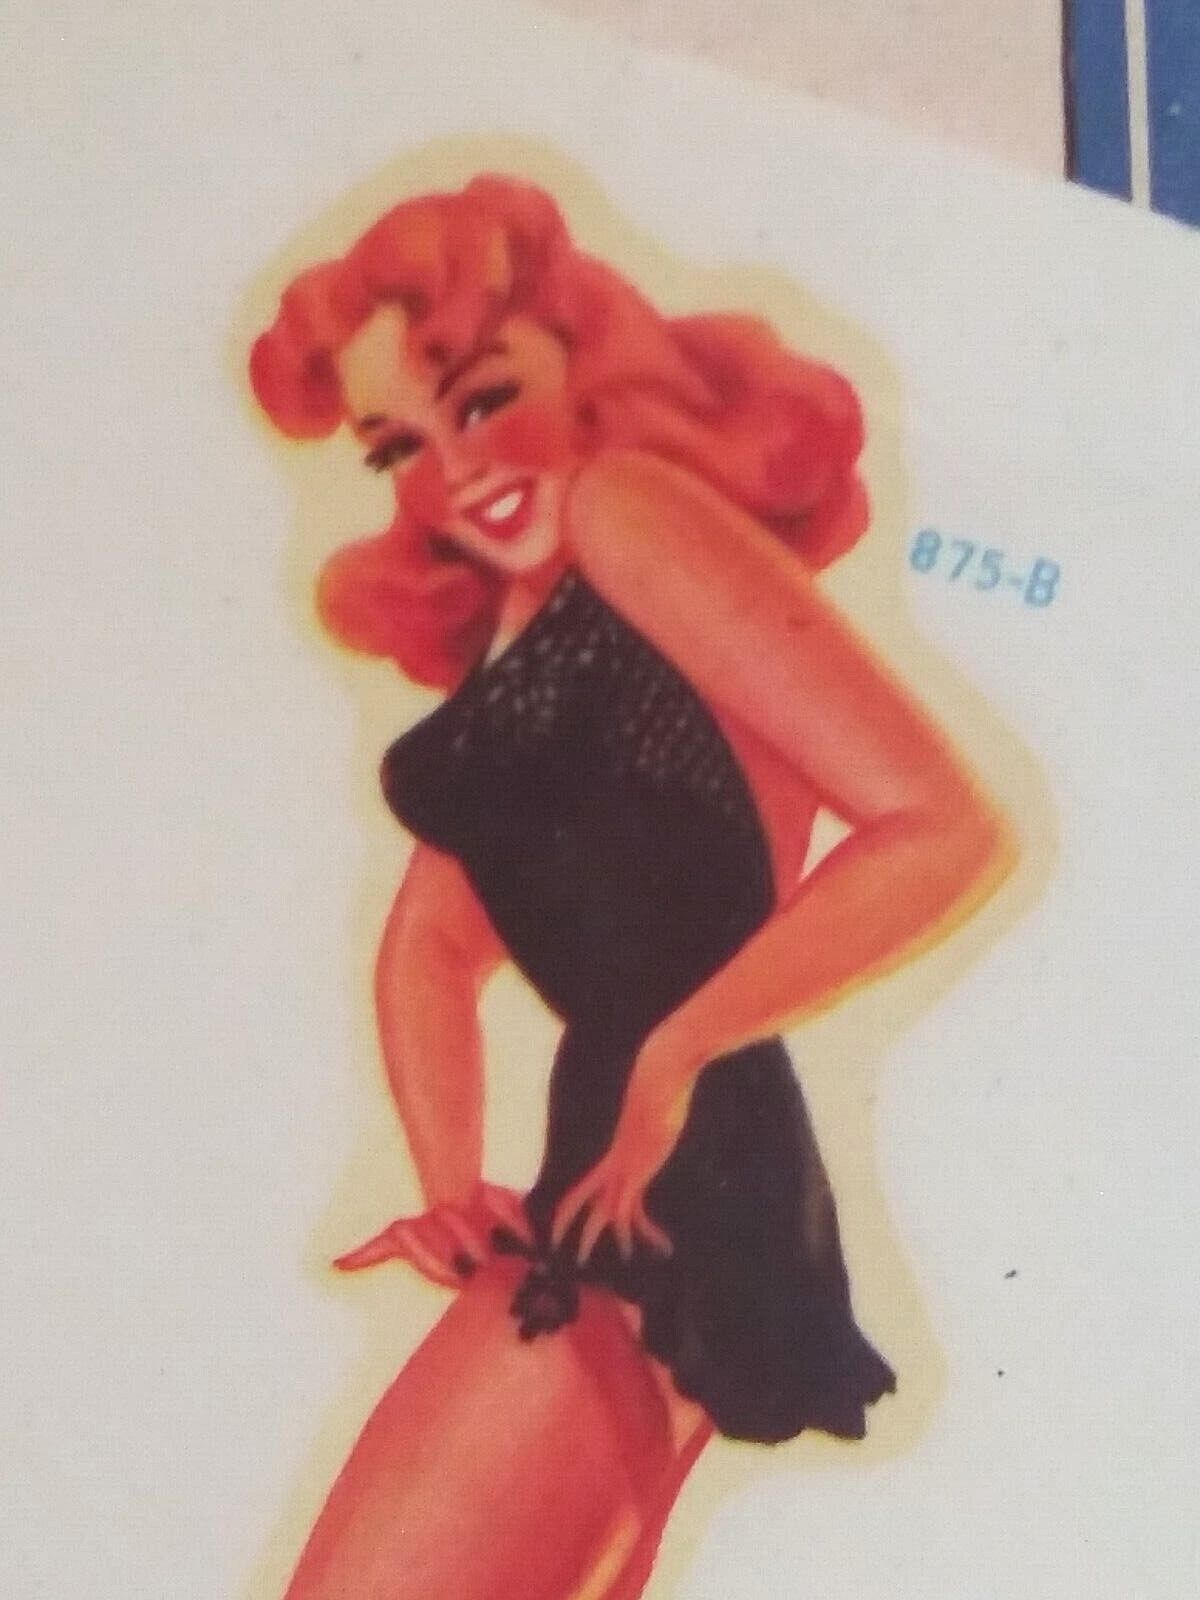 Redhead Pinup Girl Meyercord Vintage Water Slide Transfer Decal c1950s 875-B